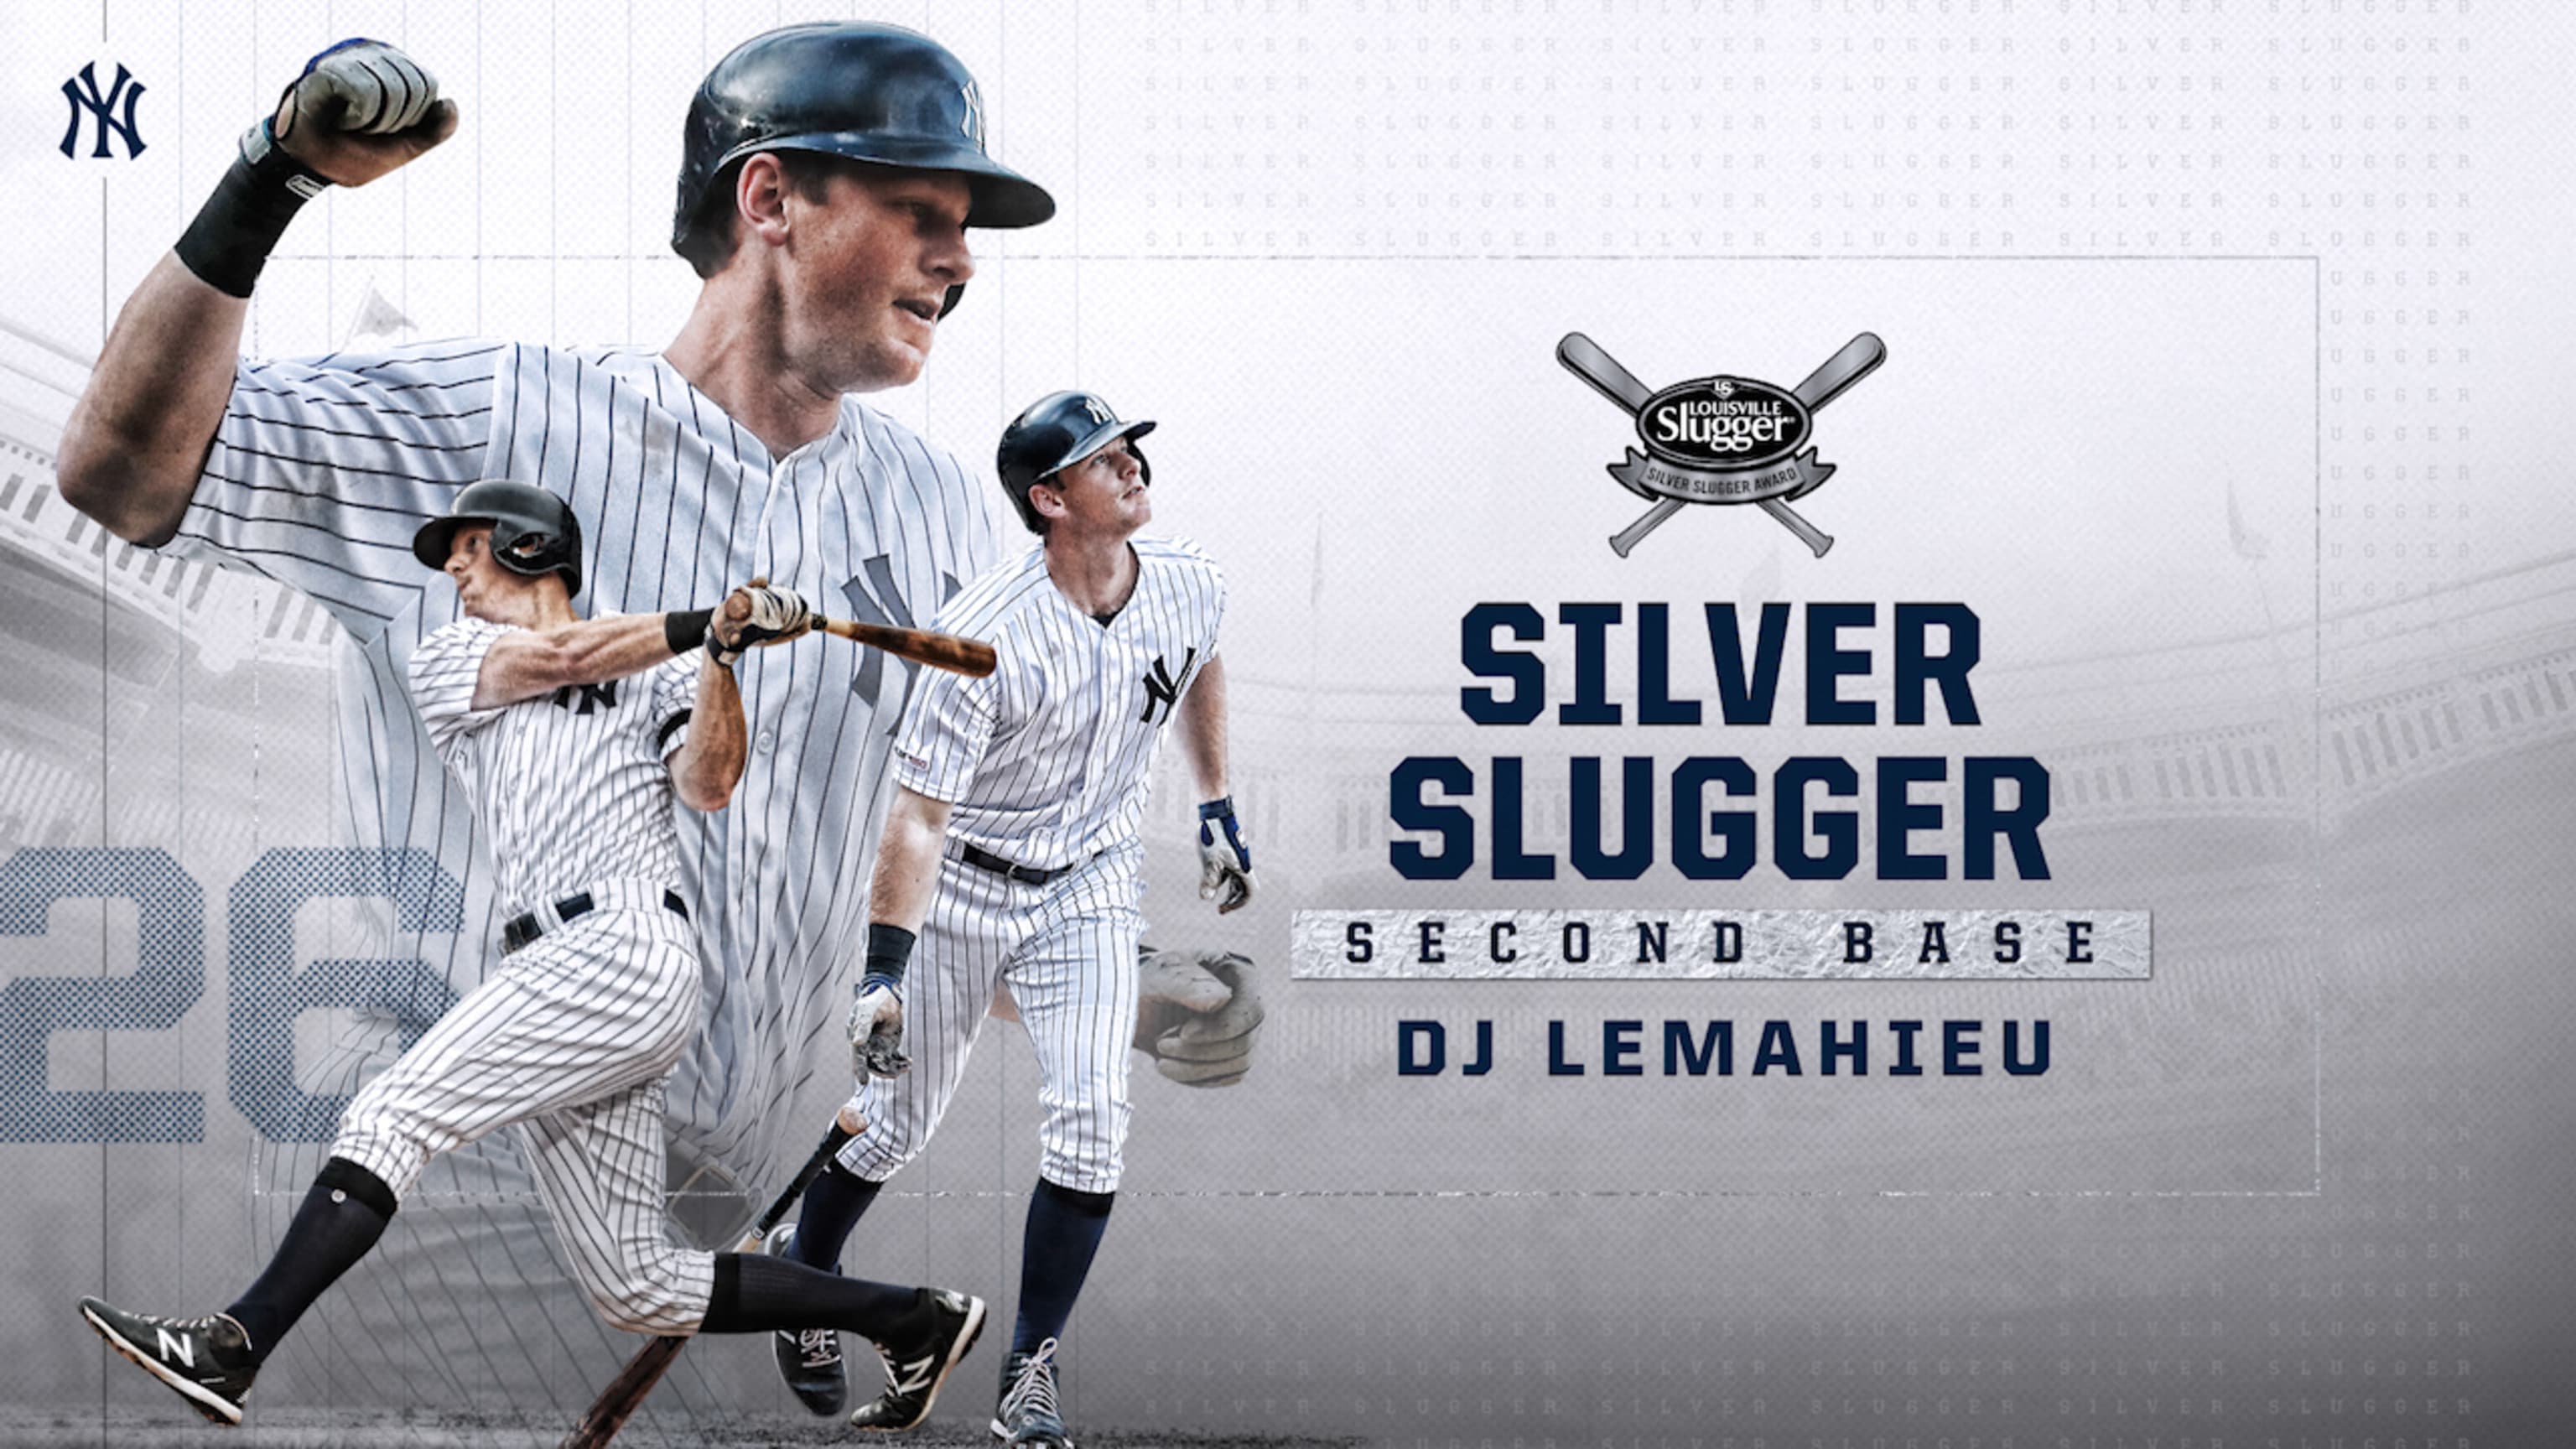 Bregman, LeMahieu Win Silver Slugger Awards – LSU